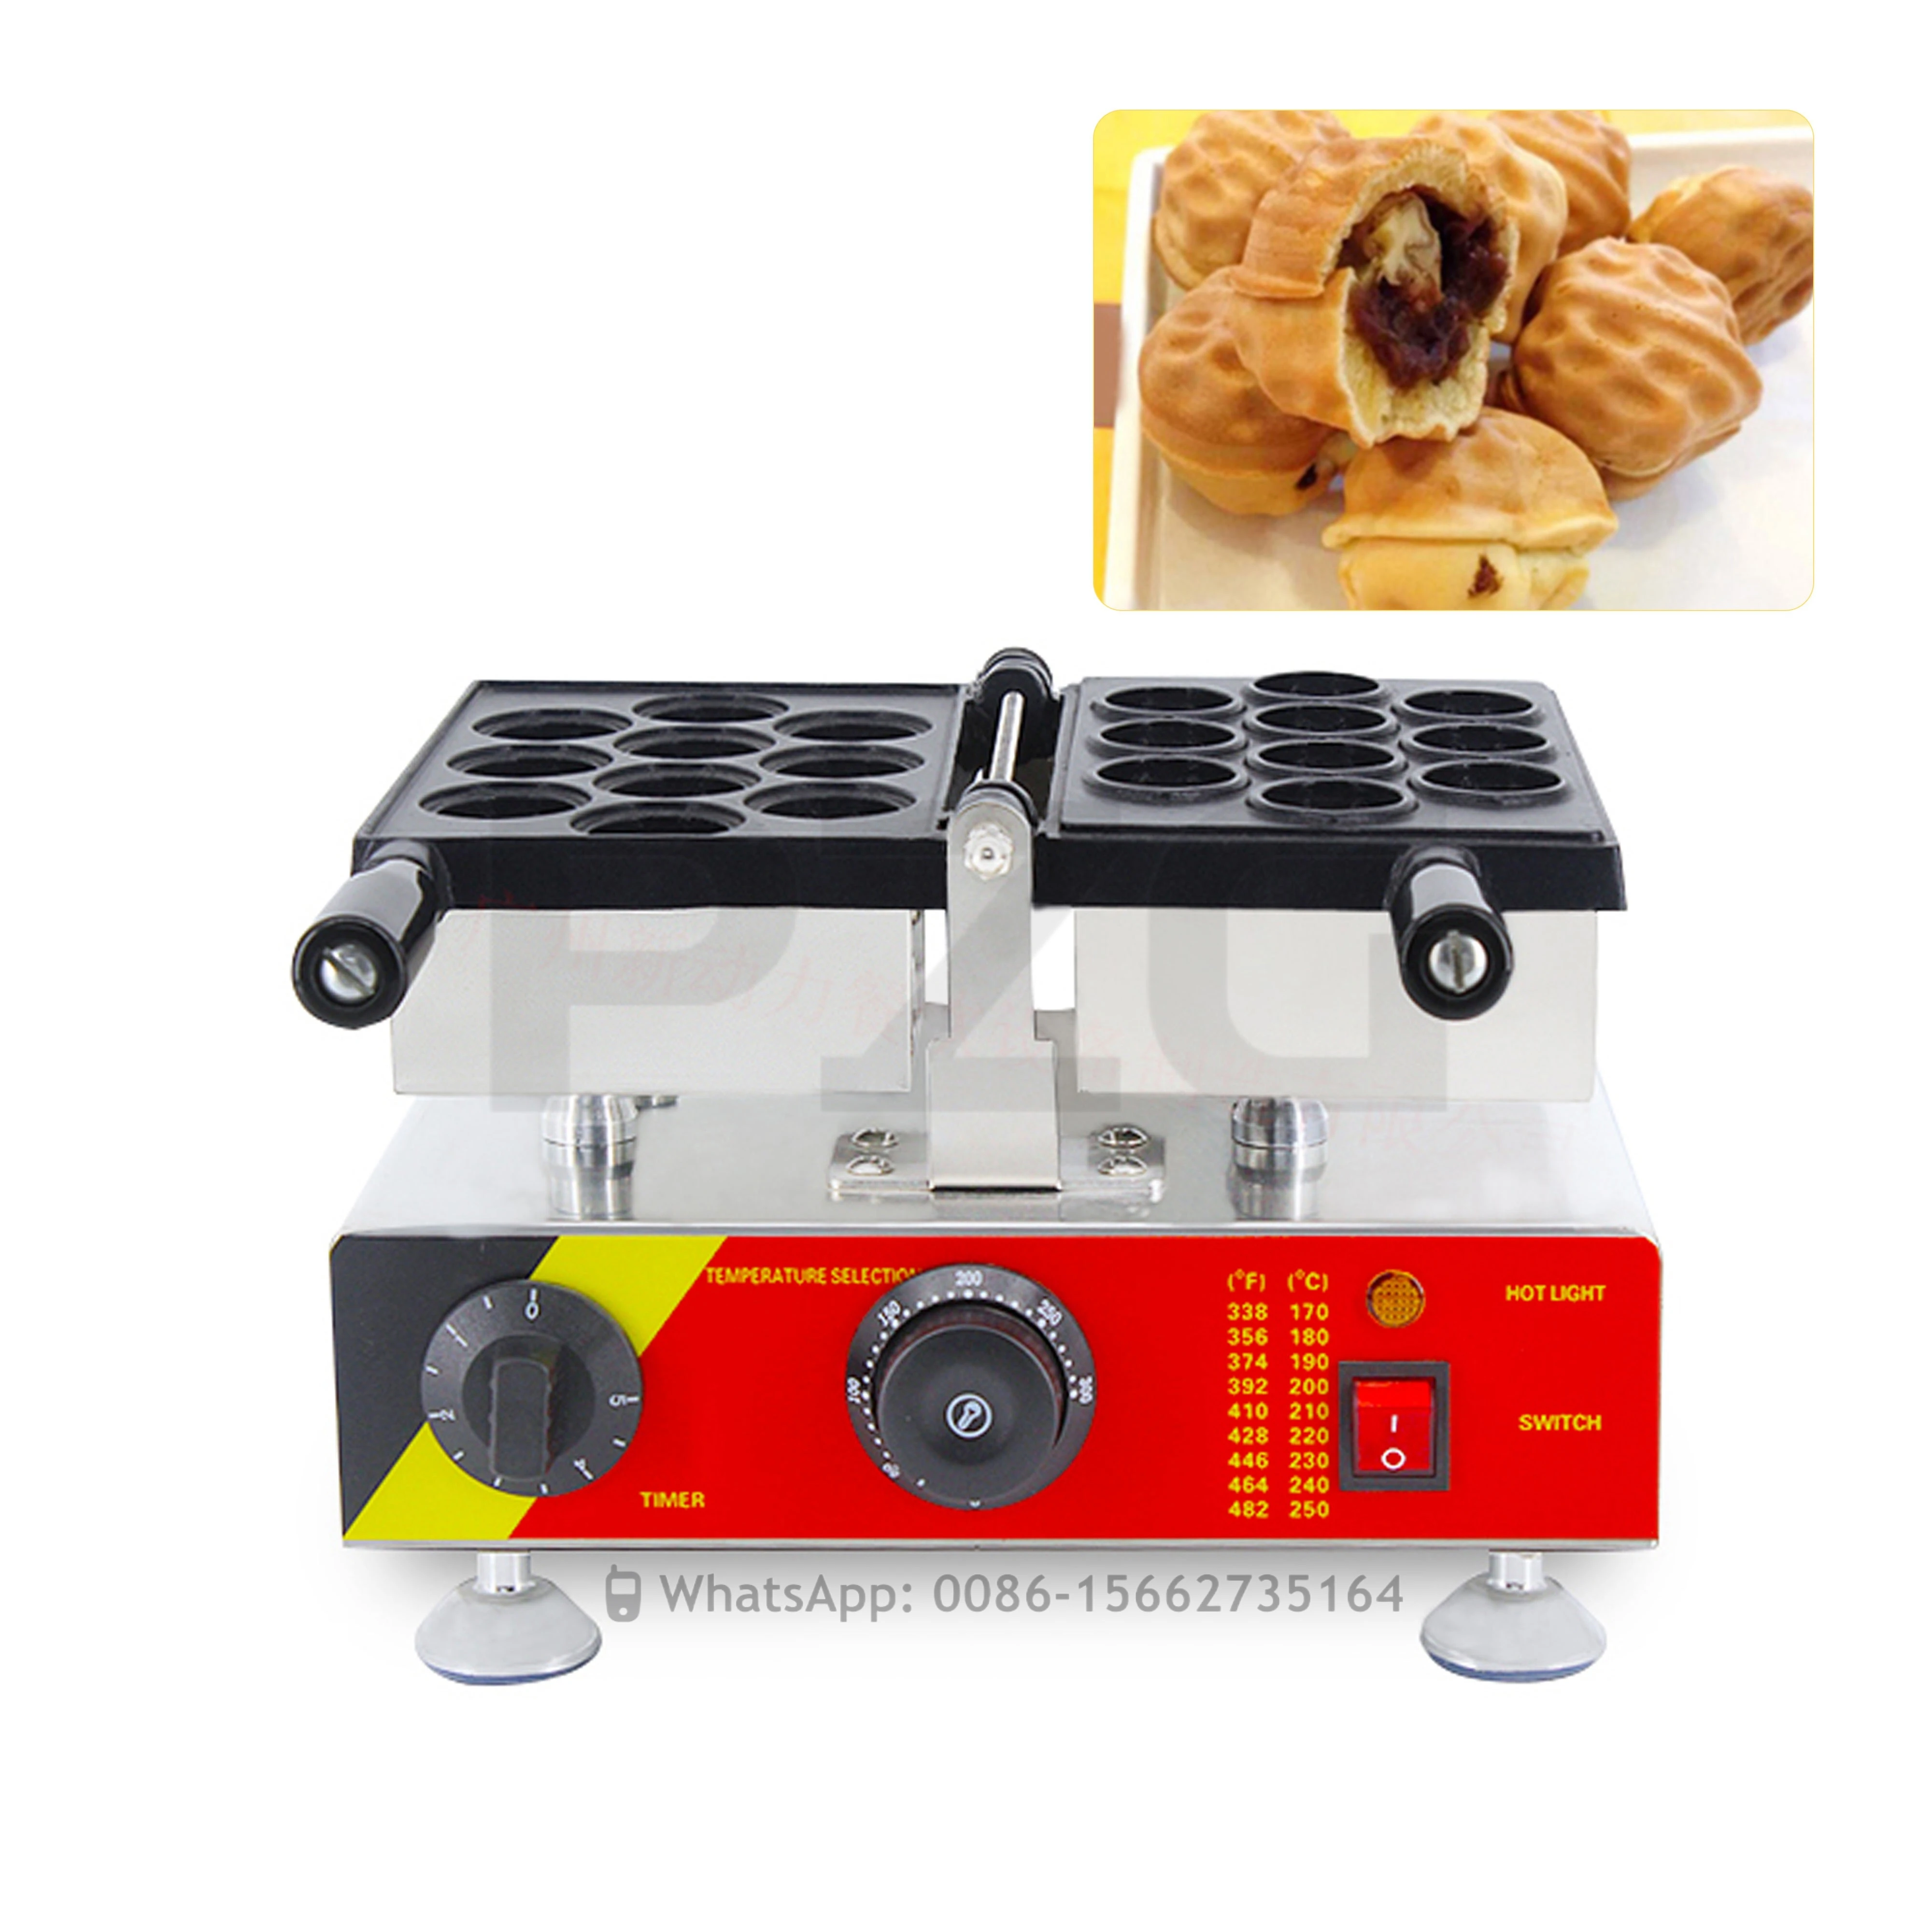 

110V 220V Walnut Shapes Waffle Maker Machine Electric Walnut Cake Making Machine Manju Waffle Maker To Make Nut Waffle